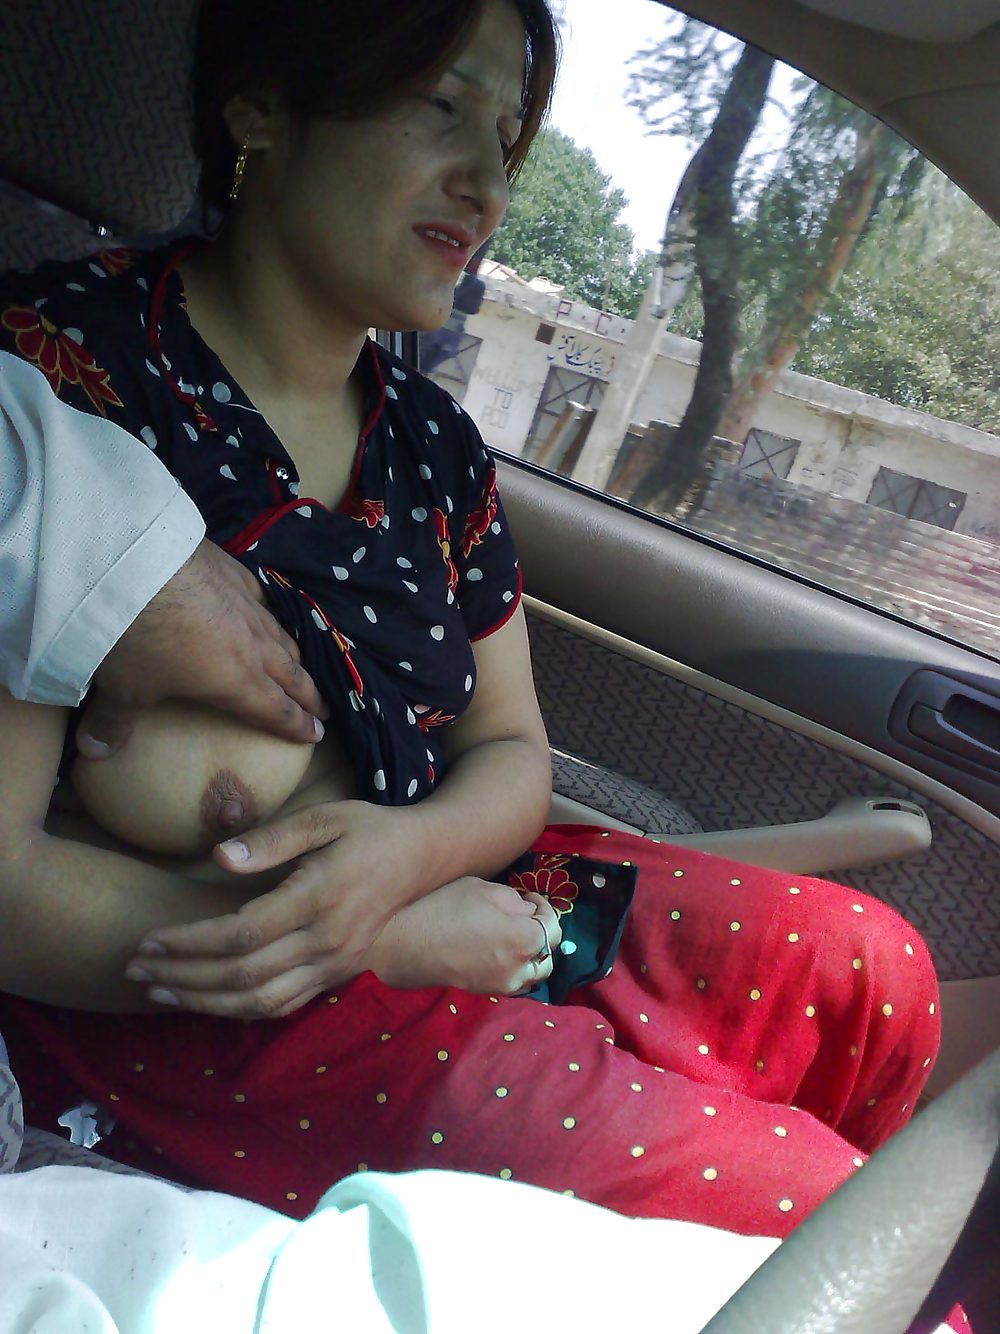 Pakistani prostitute in car #6103222